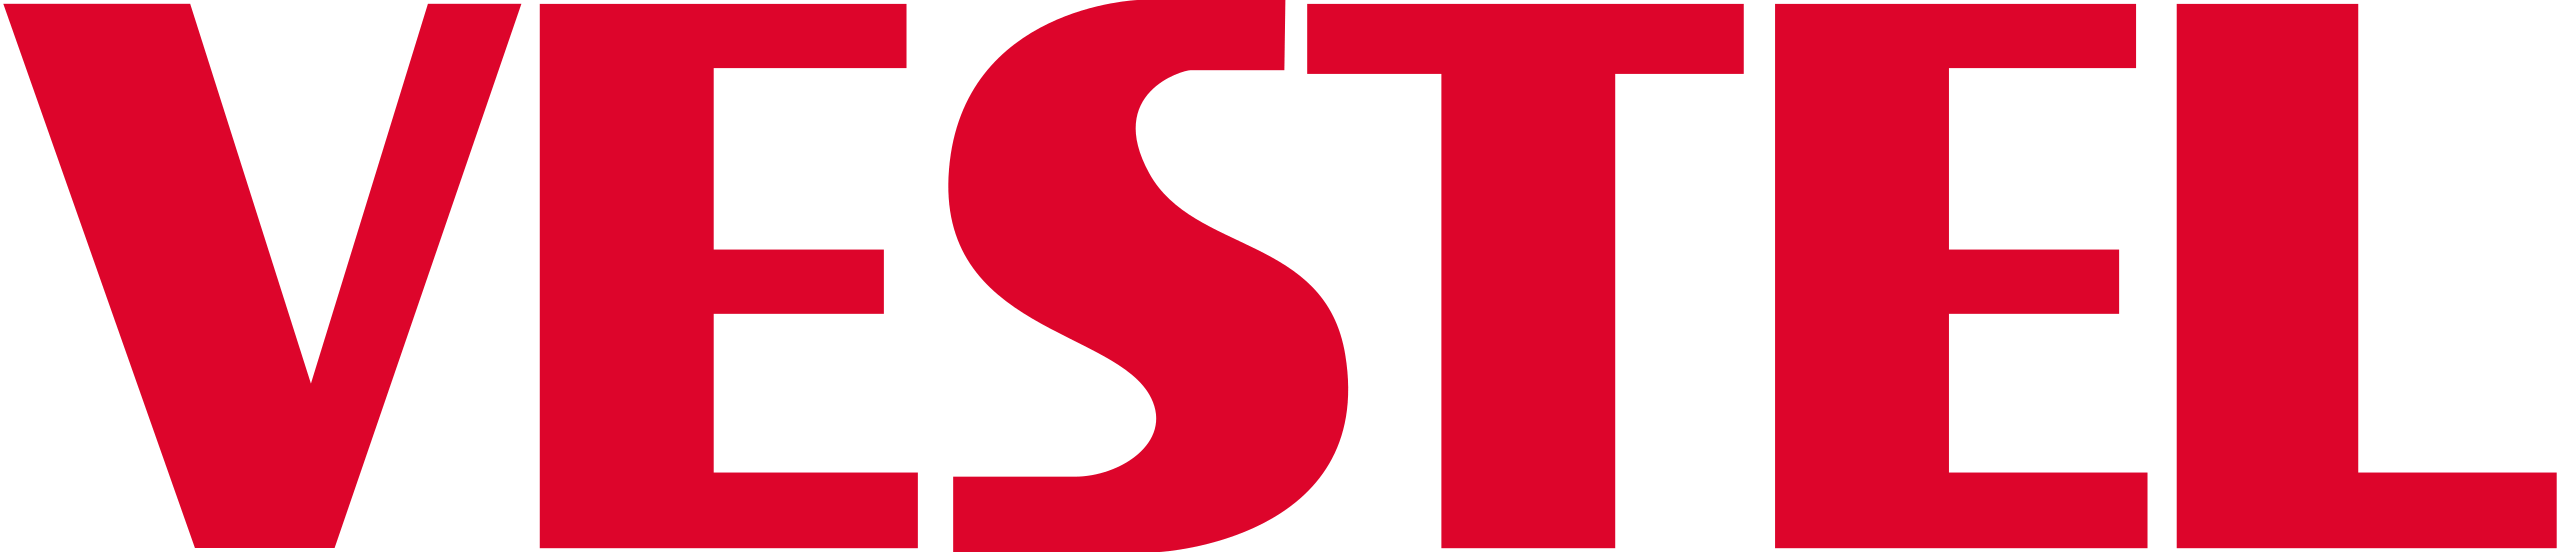 Vestel_logo.svg